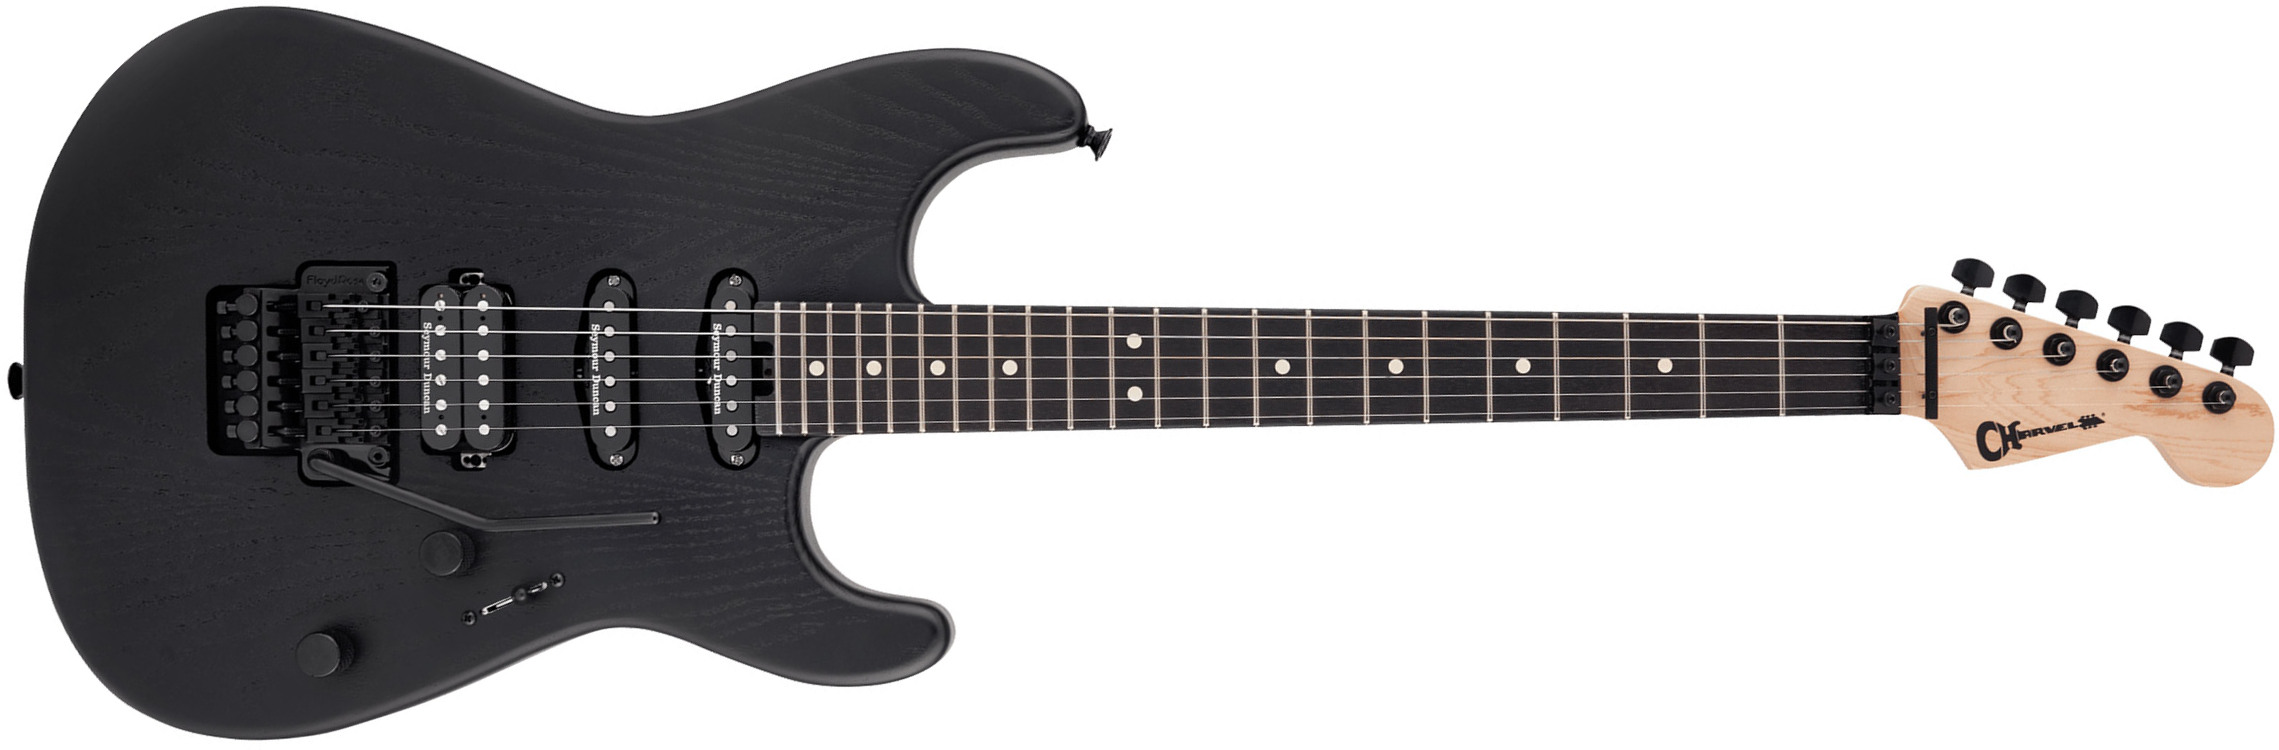 Charvel San Dimas Style 1 Hss Fr E Sassafras  Pro-mod Seymour Duncan Eb - Satin Black - Str shape electric guitar - Main picture